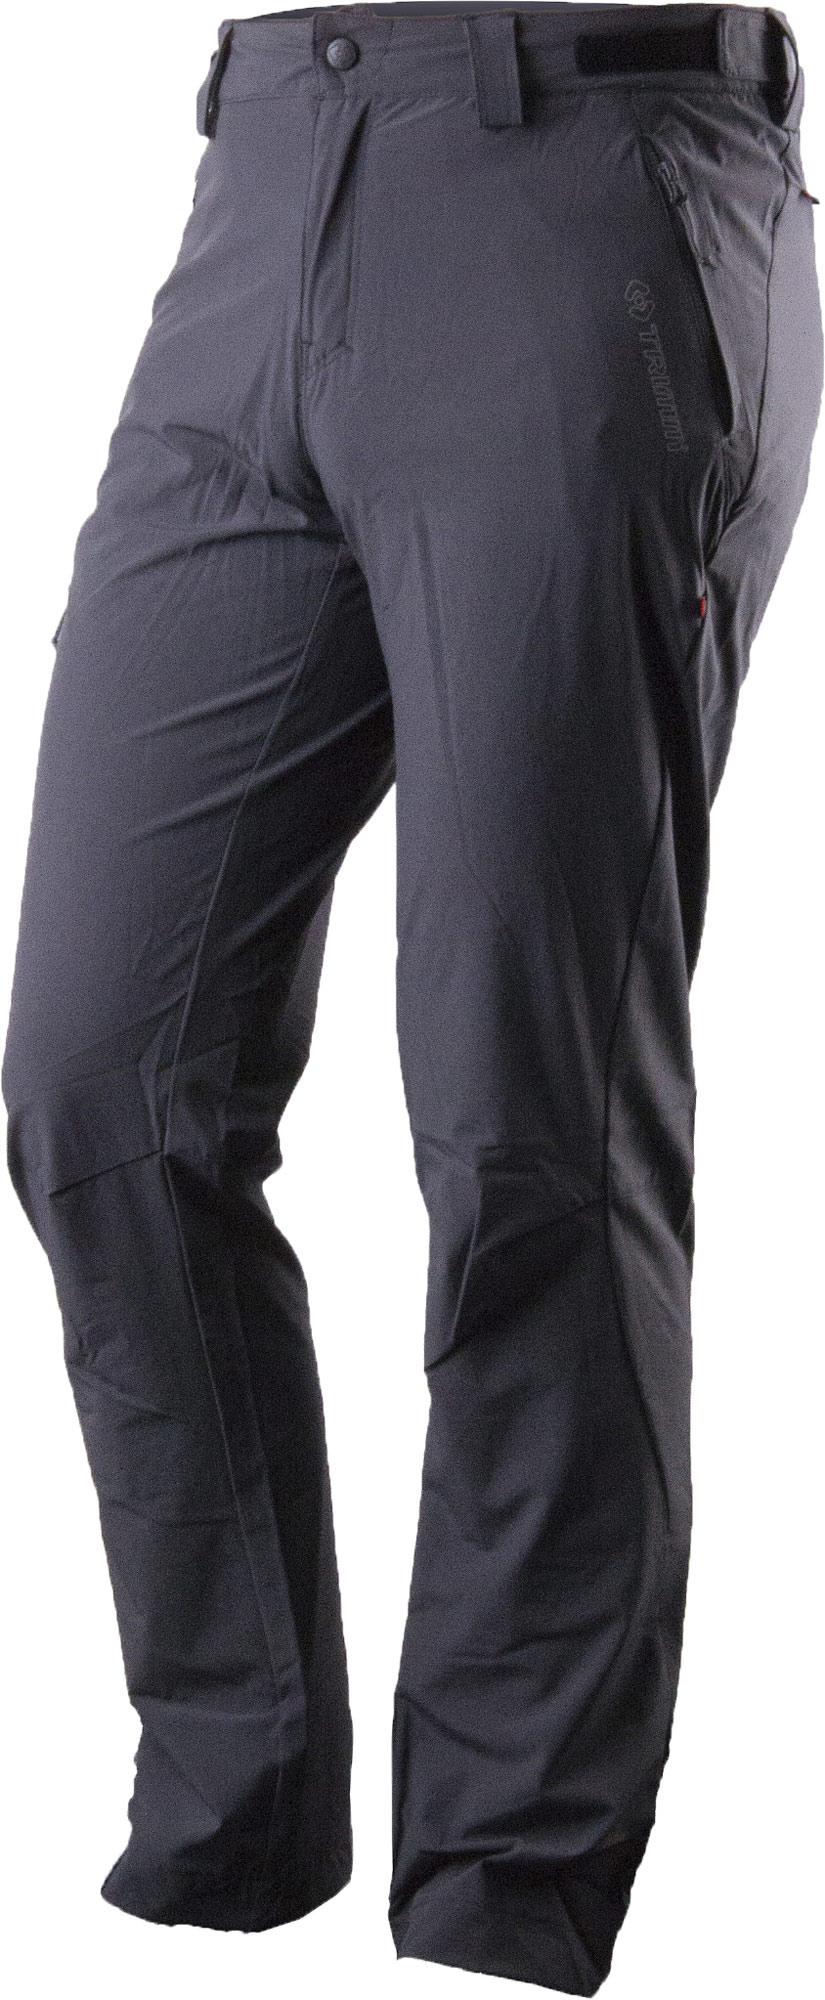 Men's stretch trousers